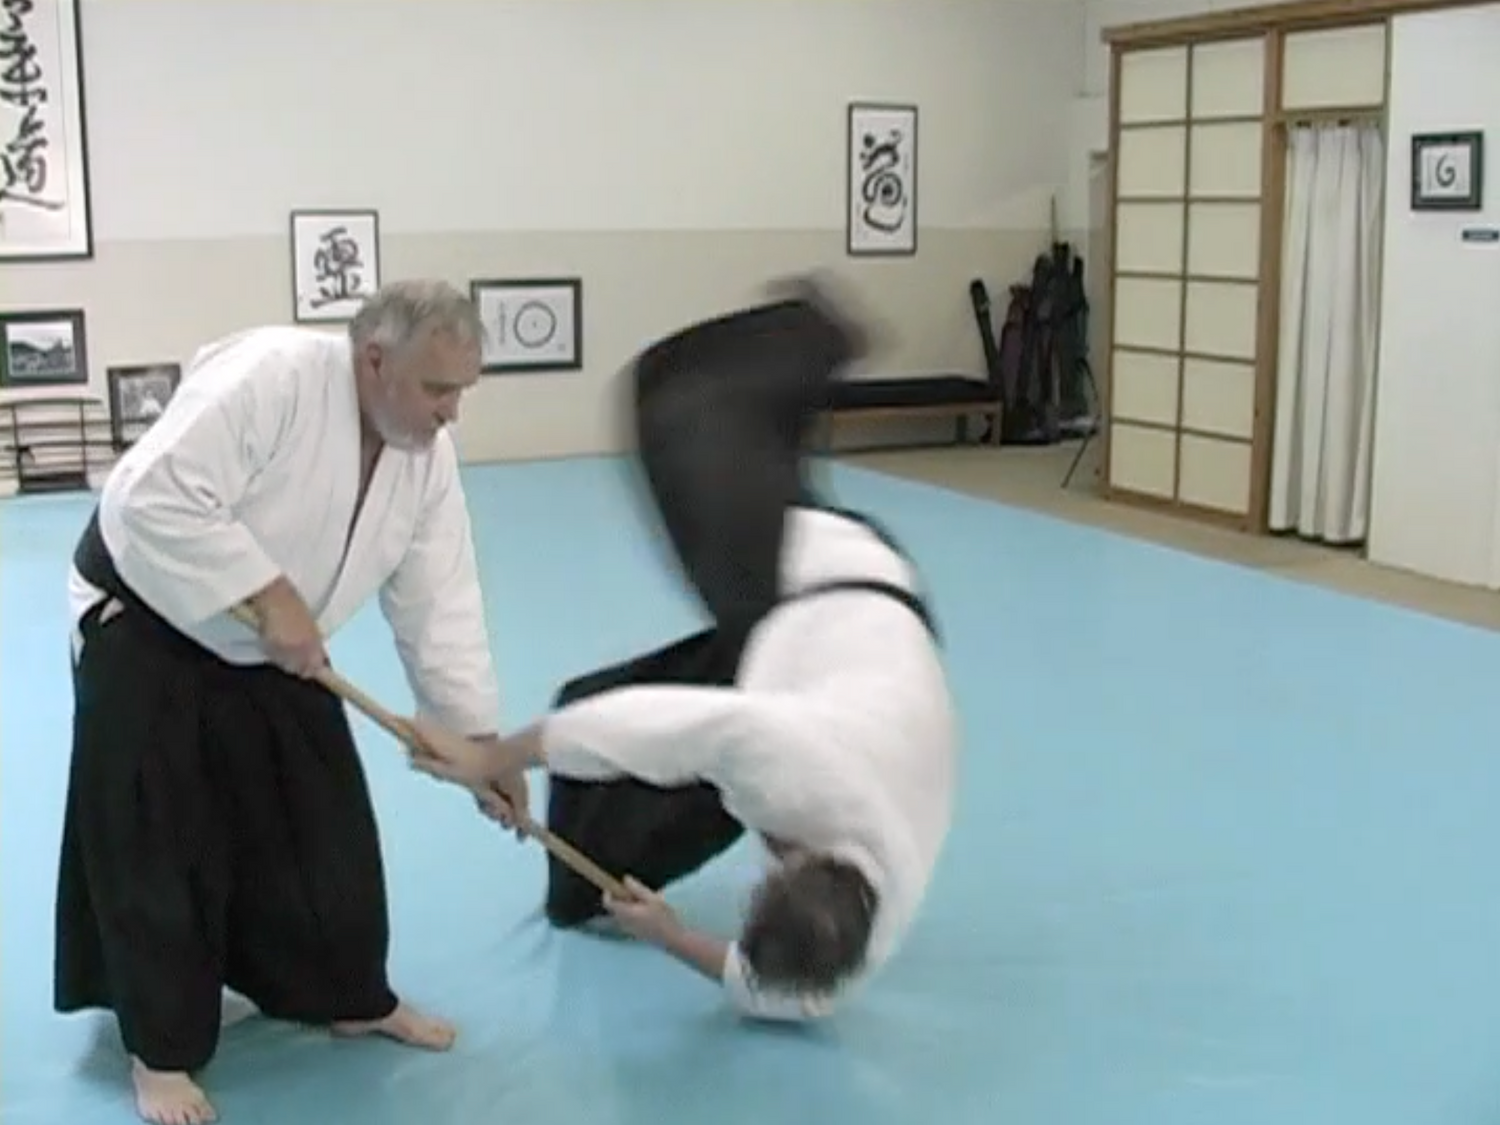 Zanshin and Ma-ai in Aikido DVD by Dennis Hooker - Budovideos Inc